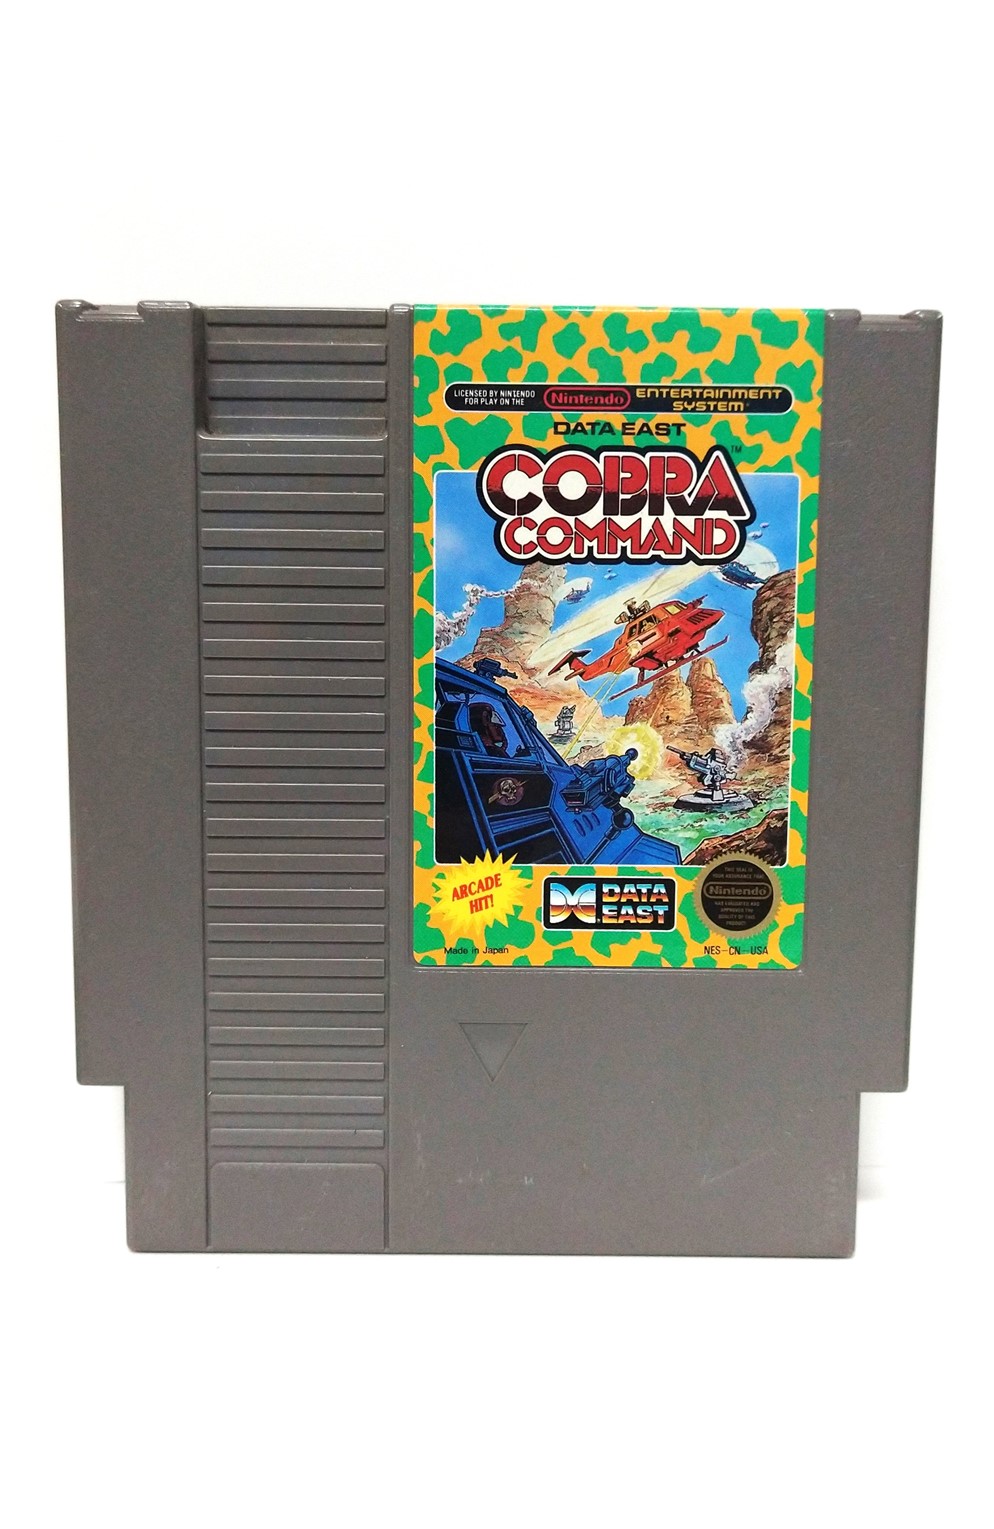 Nintendo Nes Cobra Command Cartridge Only (Very Good)